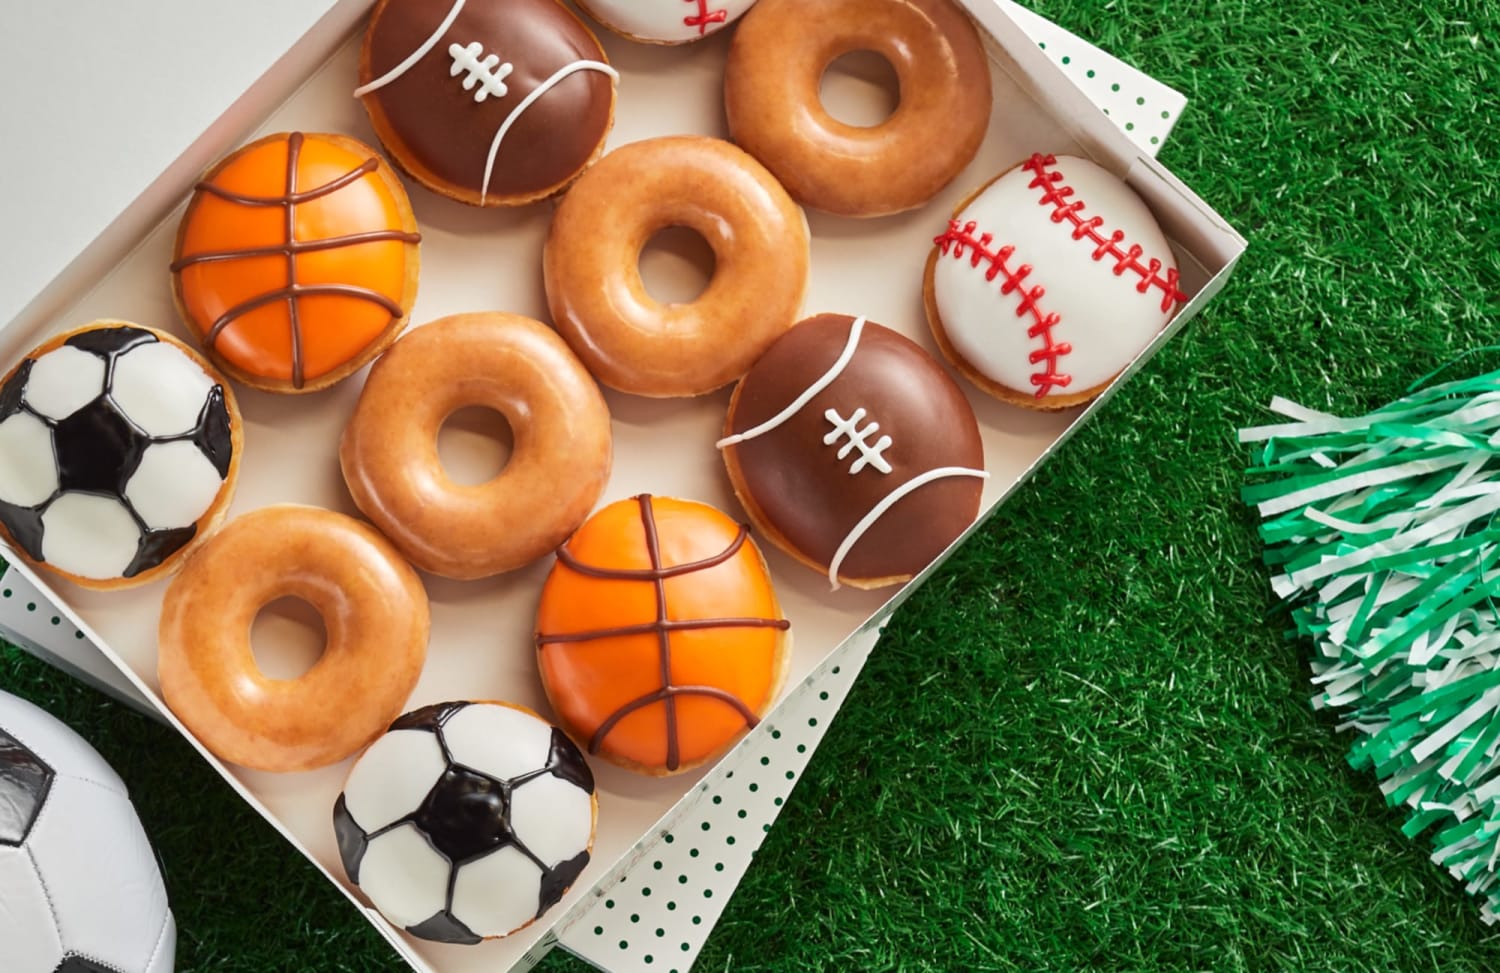 Krispy Kreme celebrates all sports fans with the Sports Dozen